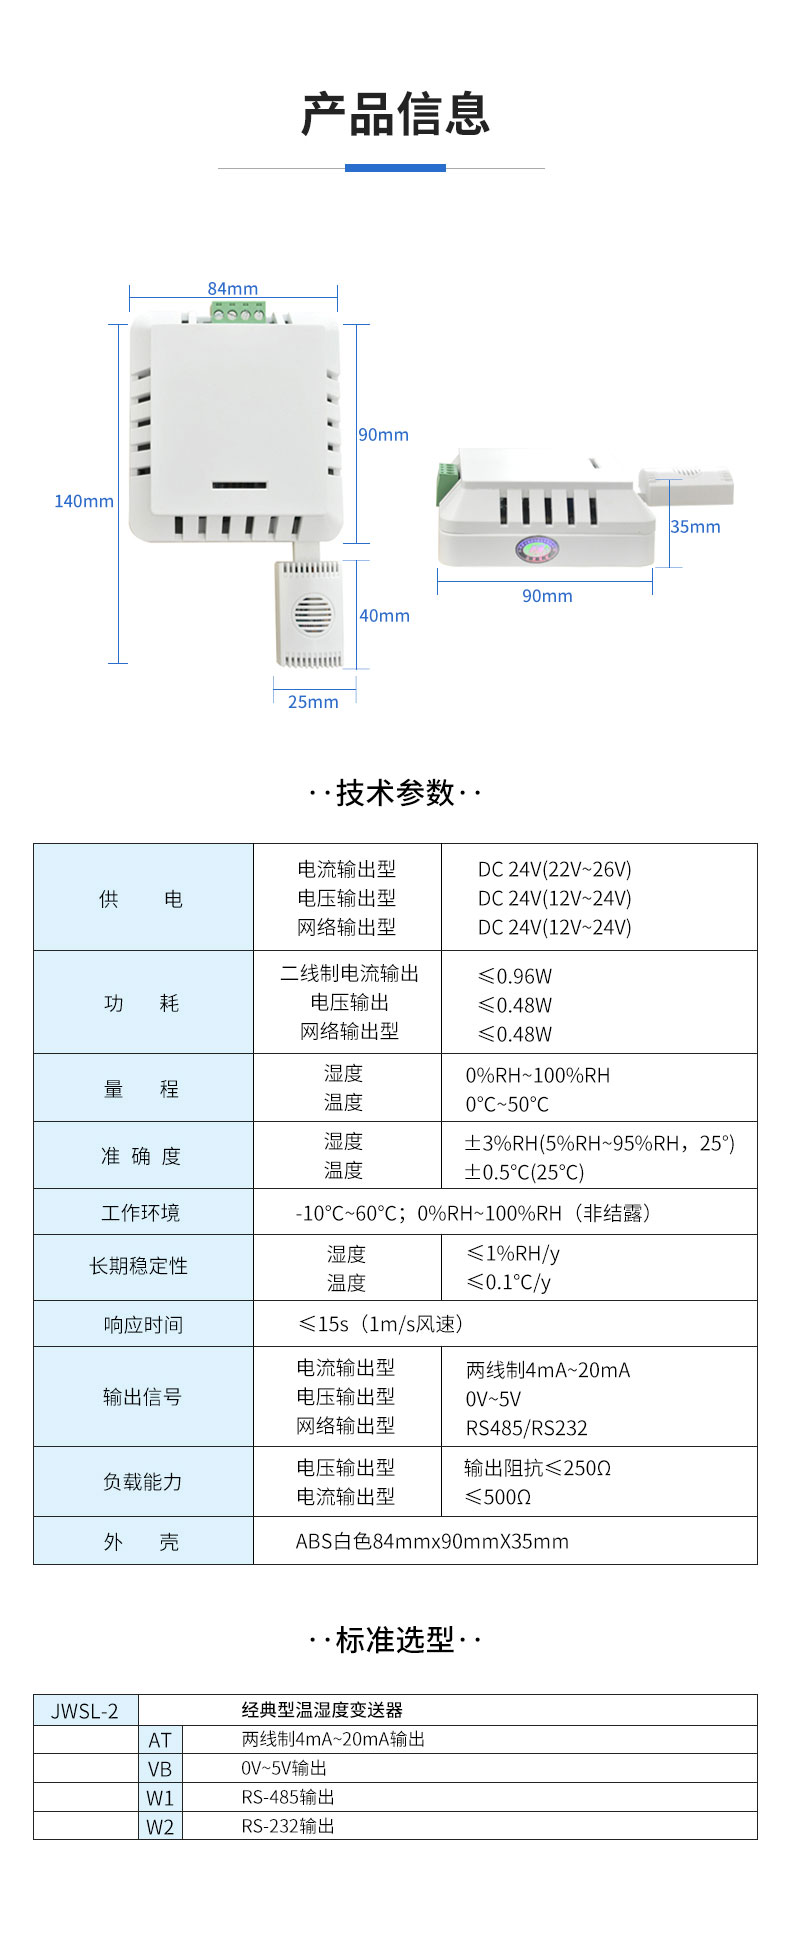 JWSL-2系列壁挂型温湿度变送器无忧服务增创效益北京昆仑邦达联合科技有限公司